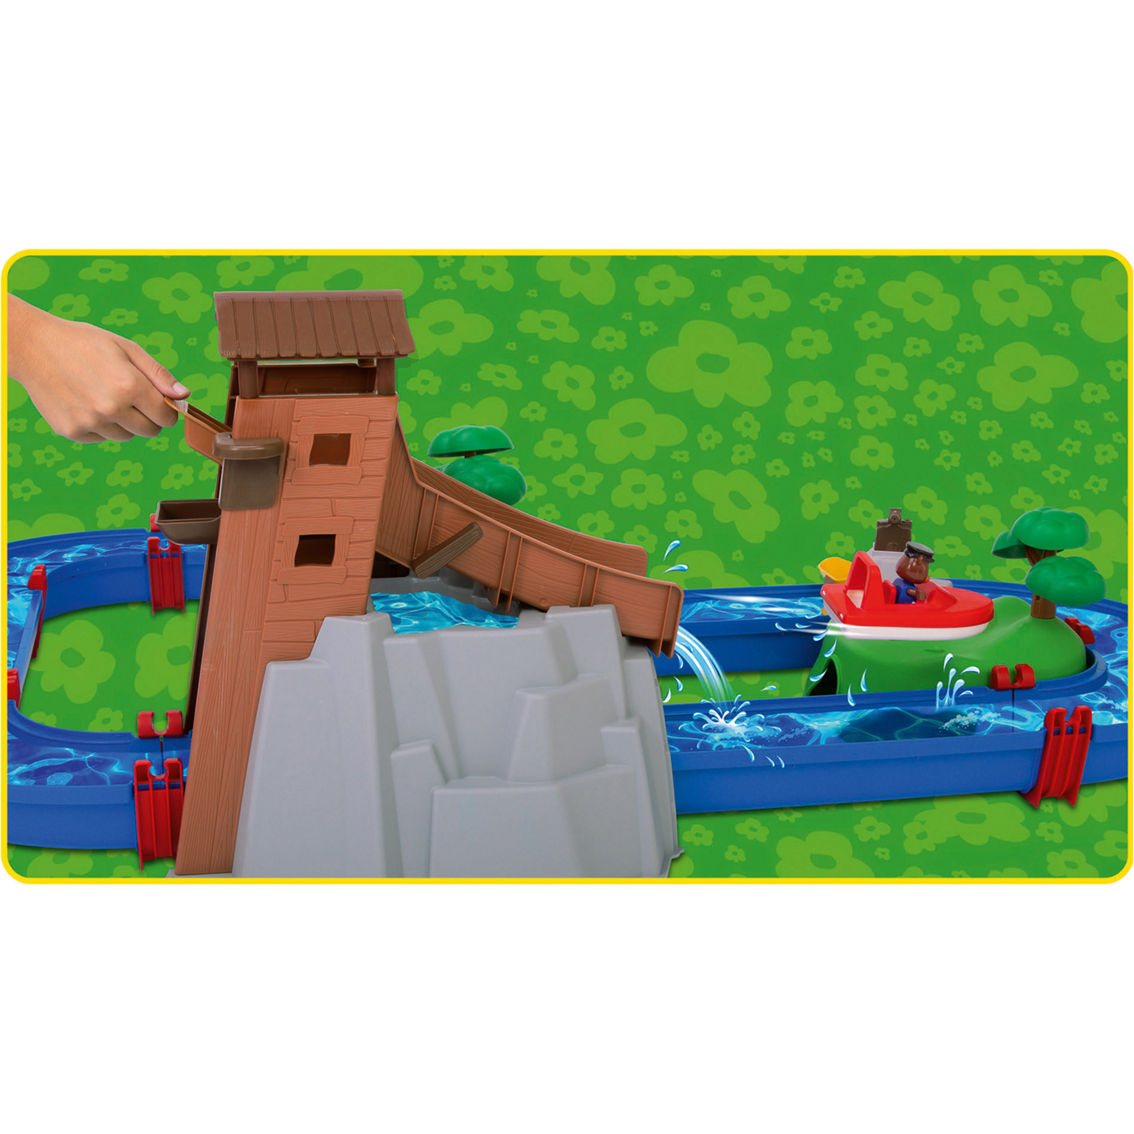 Aquaplay Adventure Land Toy - Image 3 of 5